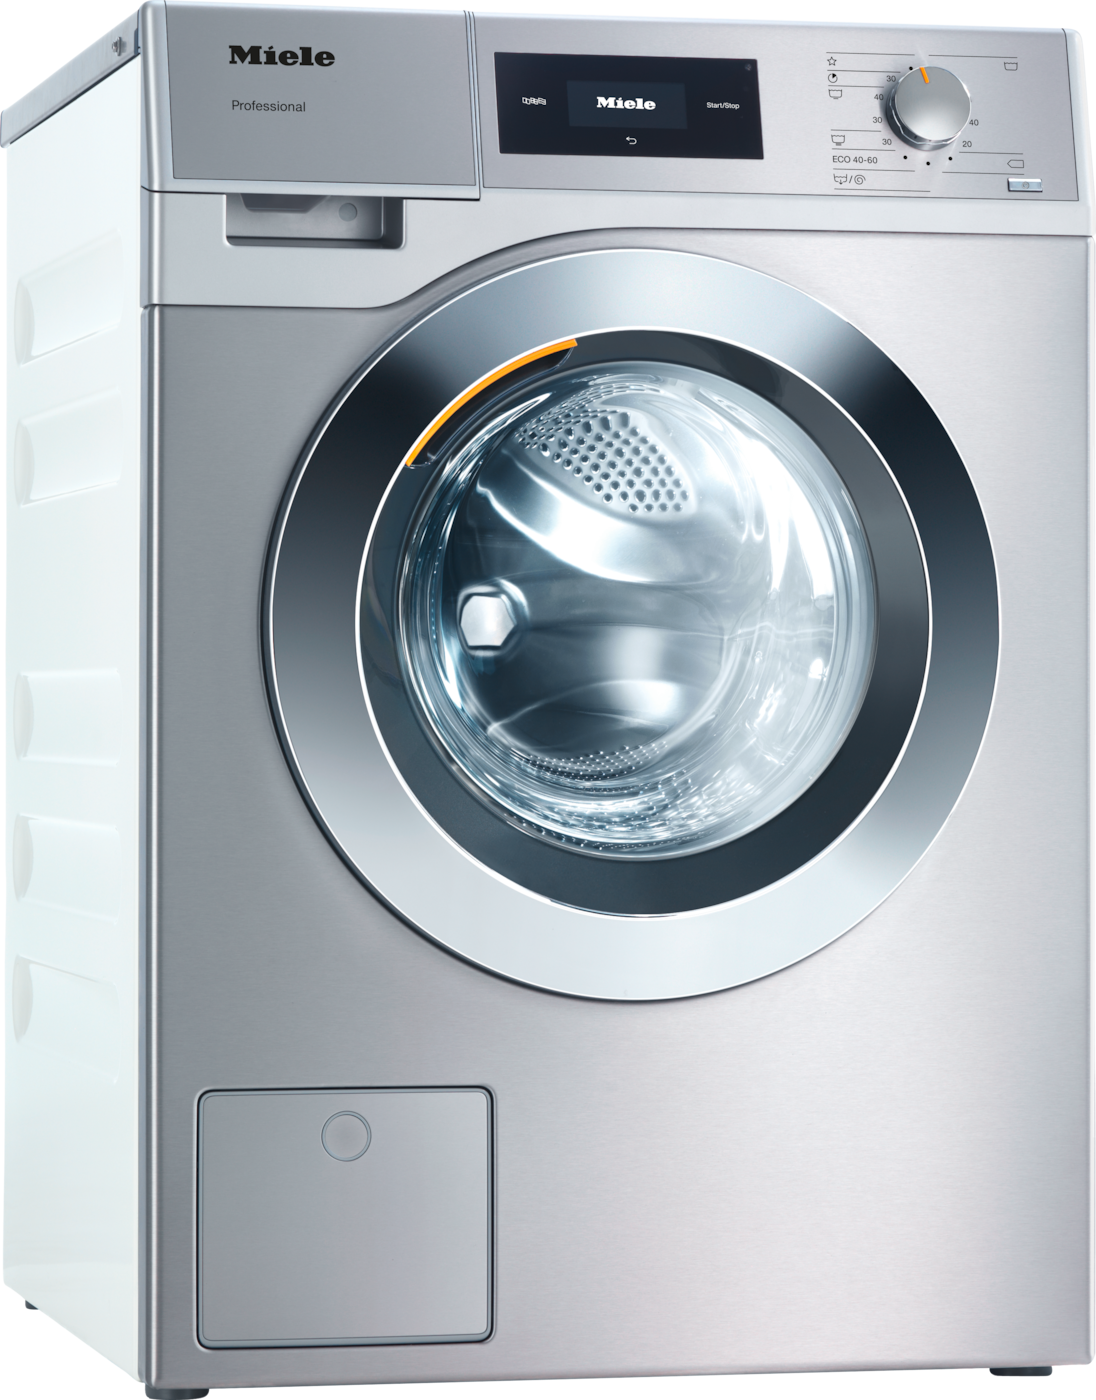 PWM 507 [EL DP] - Professional washing machine, Little Giants, electric heating, drain pump 